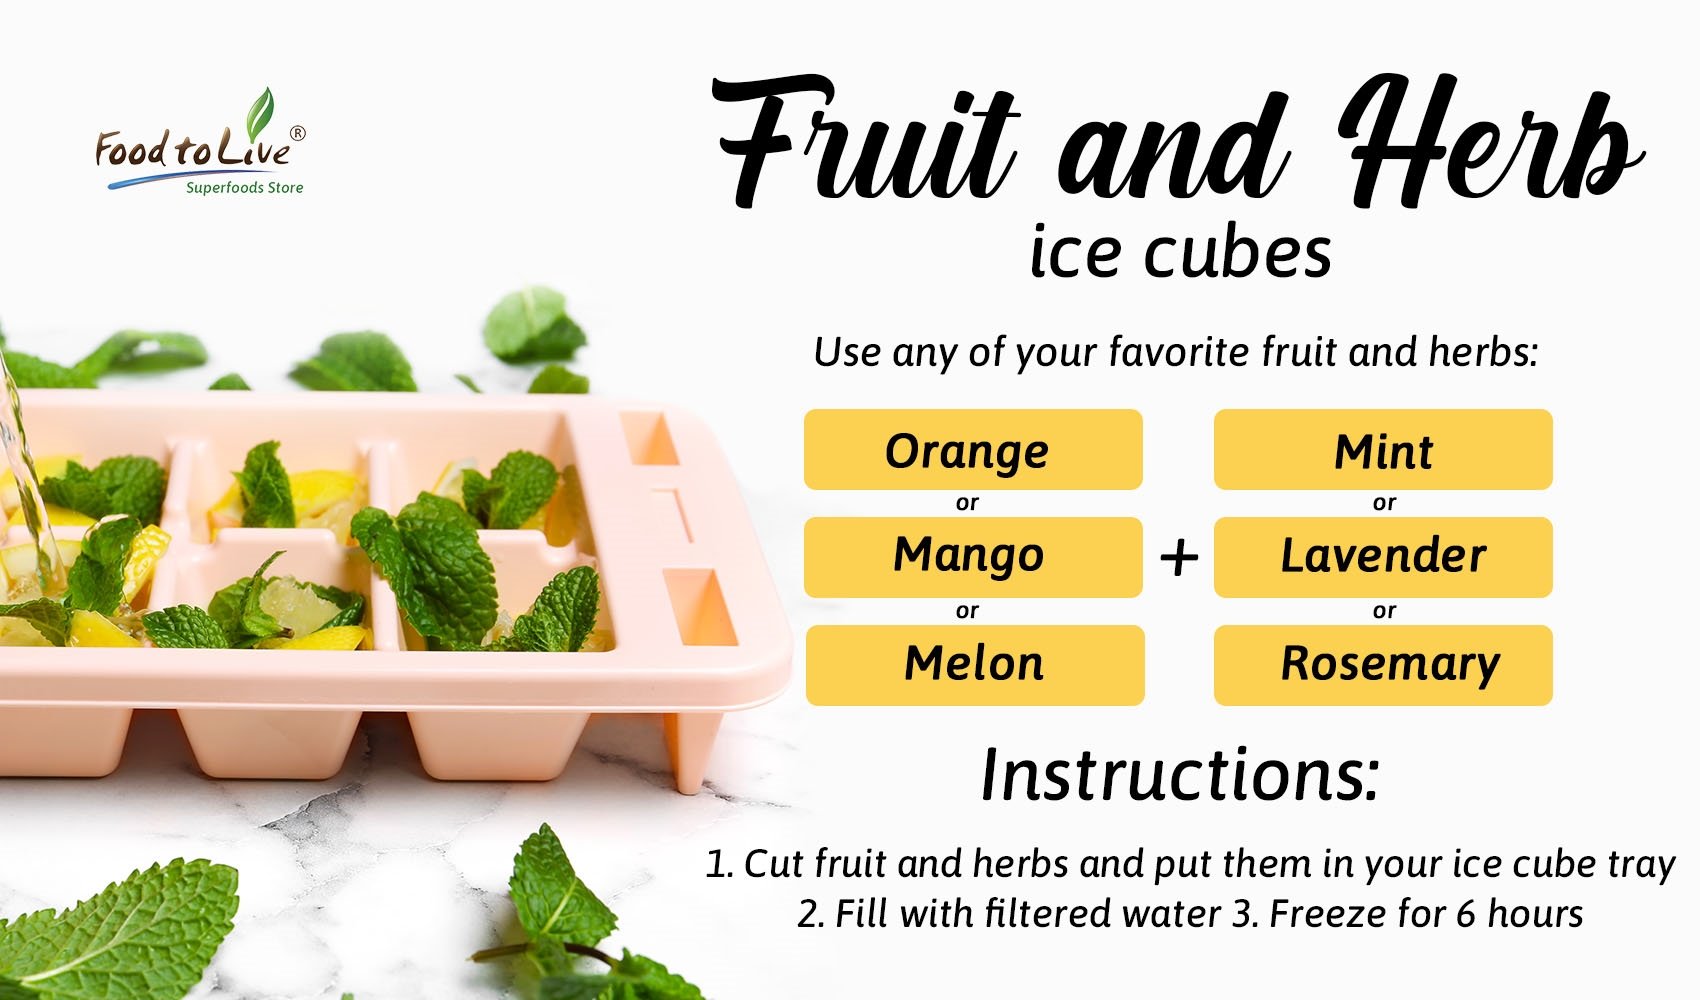 FRUIT ICE CUBES  Healthy Foodie Girl